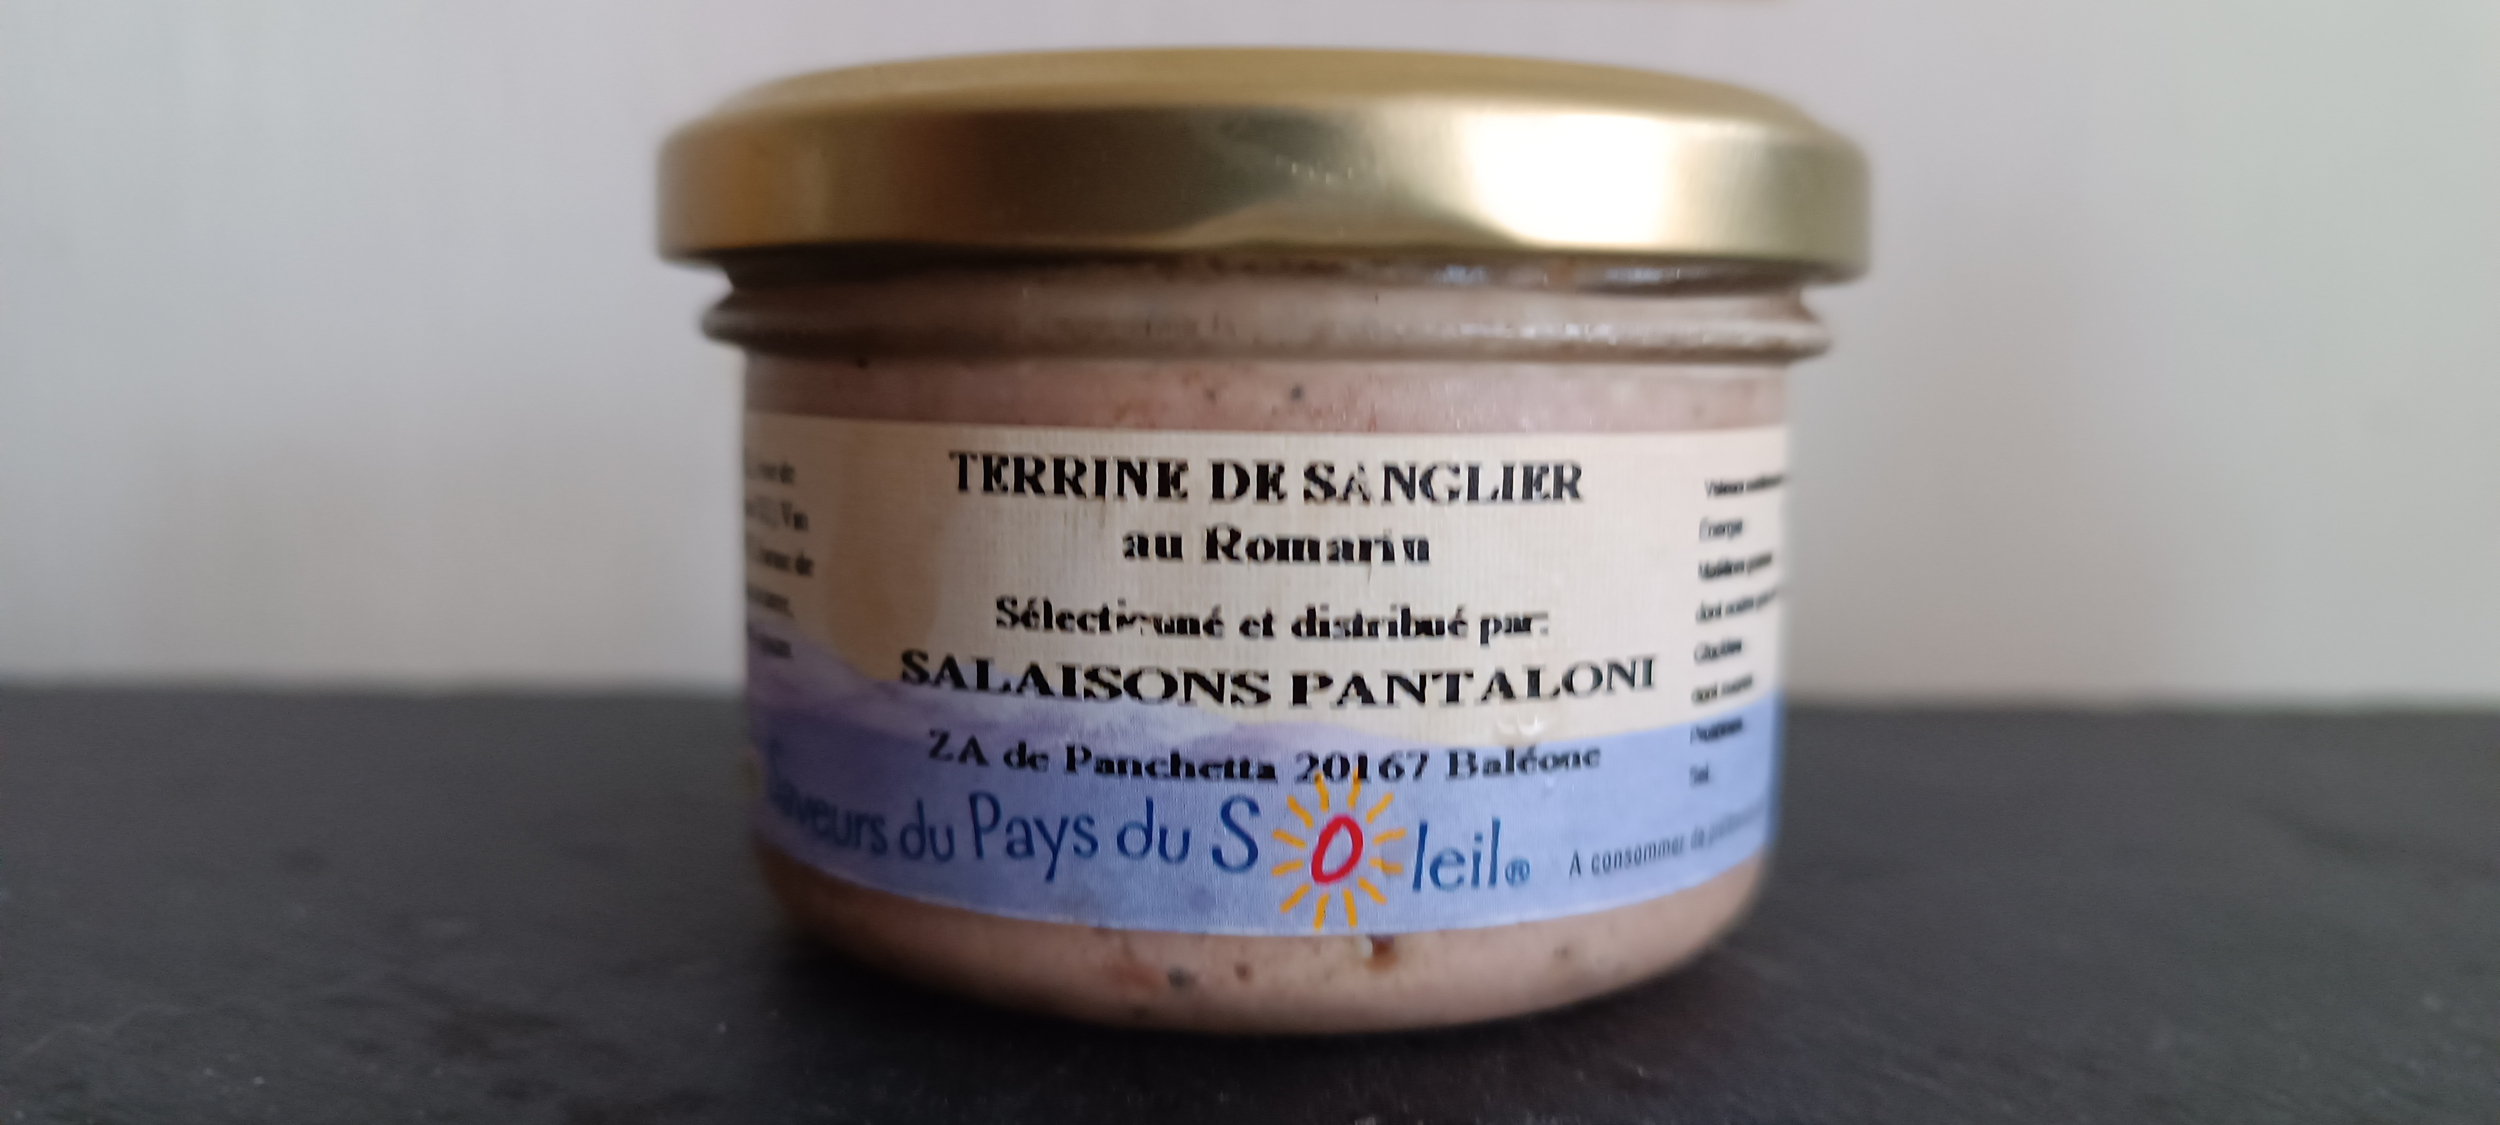 Verrine de sanglier au romarin Corse,Salaisons d’ Ucciani,Charcuterie Corse-ard-1